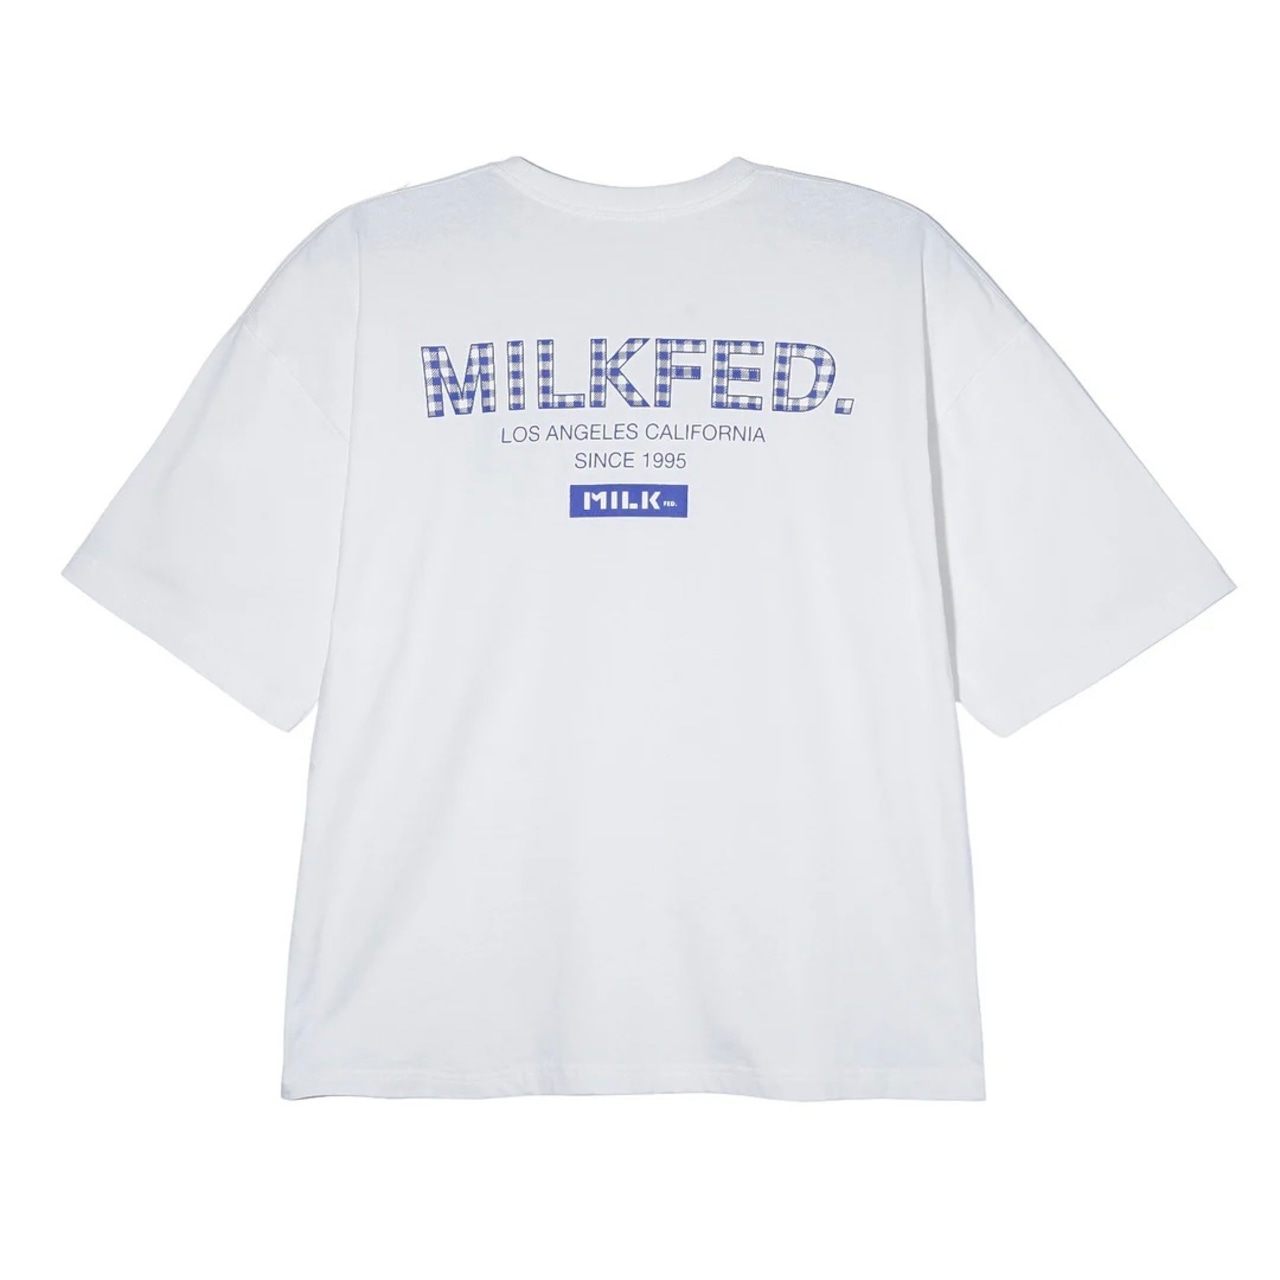 【MILKFED. 】CHECKERED LOGO WIDE S/S TEE【ミルクフェド】